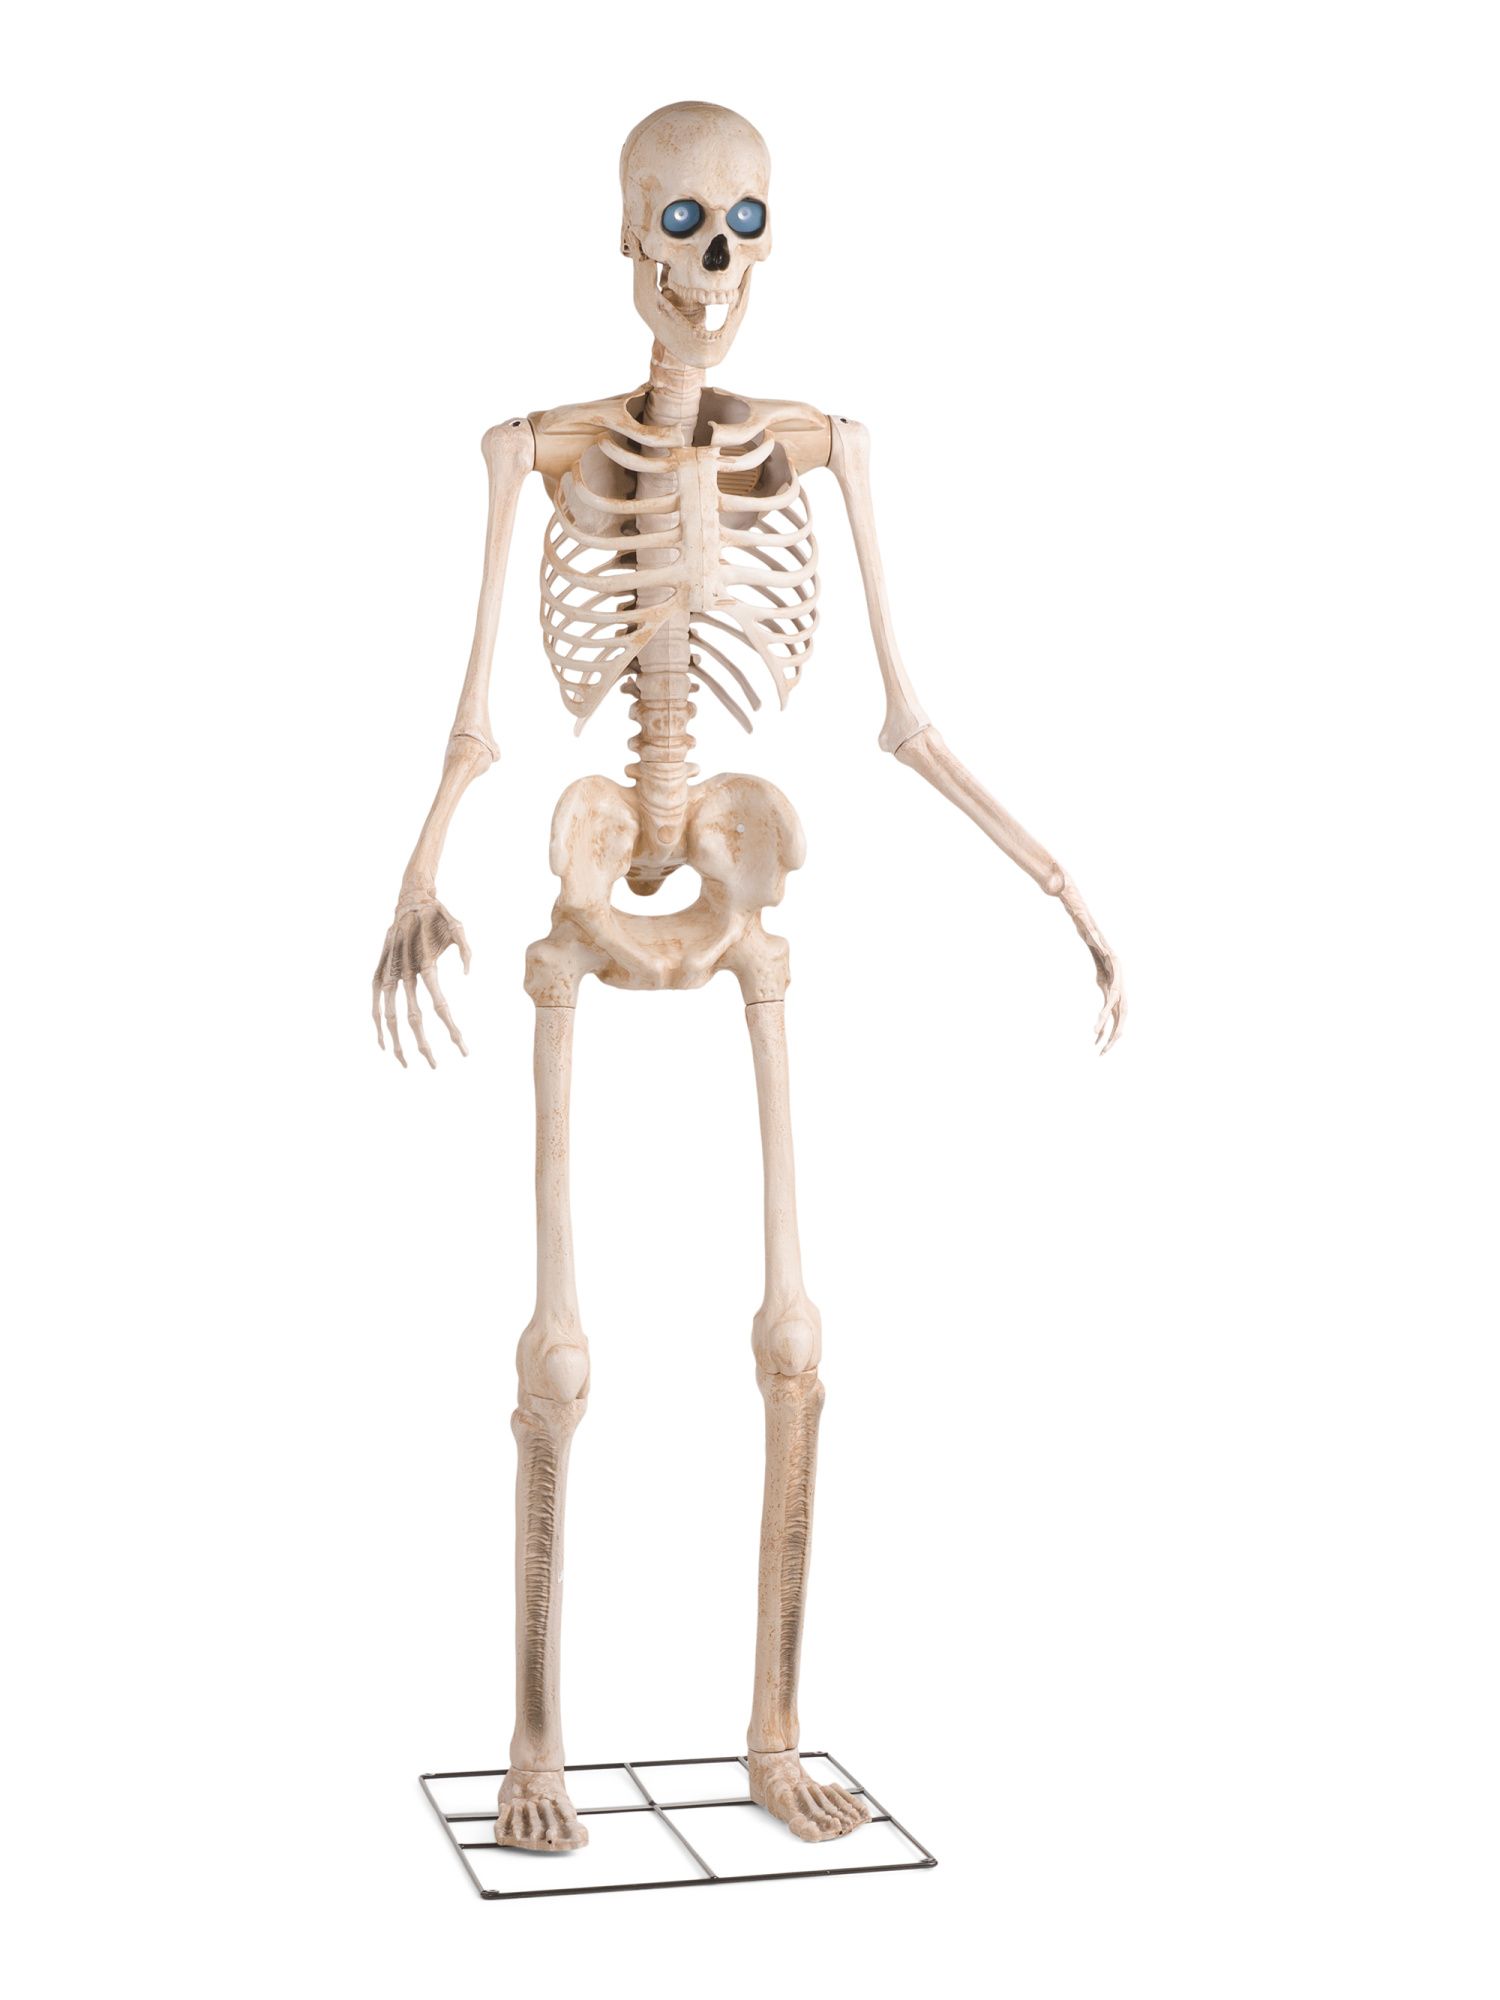 MR BONES
							
							8ft Outdoor Animated Eyes Towering Skeleton
						
						
							

	
		
	... | Marshalls